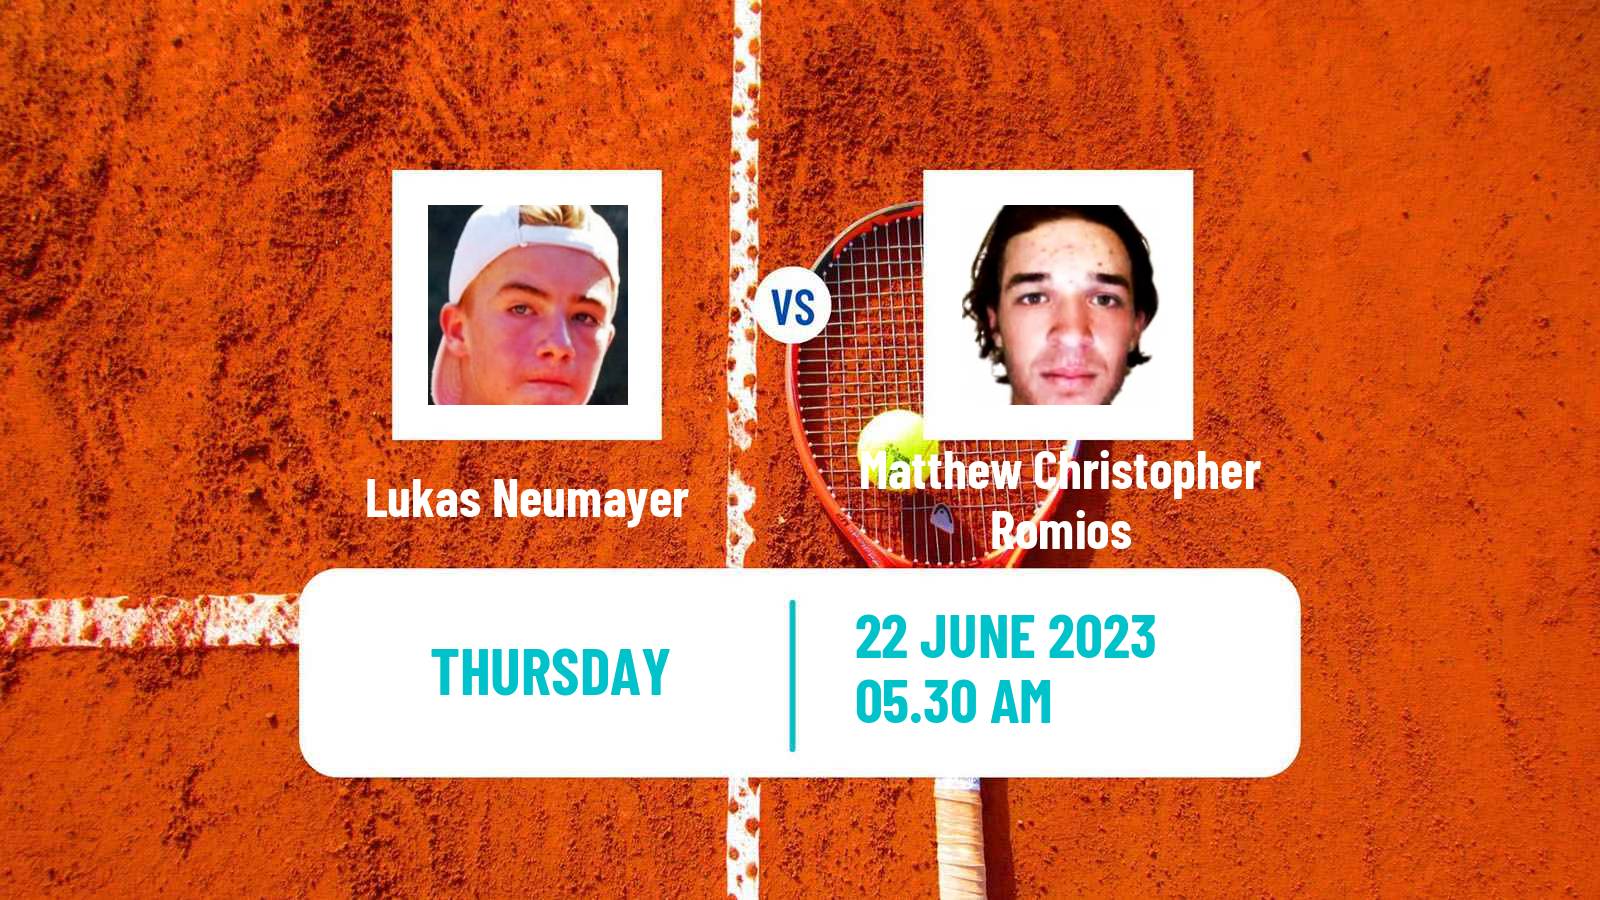 Tennis ITF M25 Poprad Men Lukas Neumayer - Matthew Christopher Romios